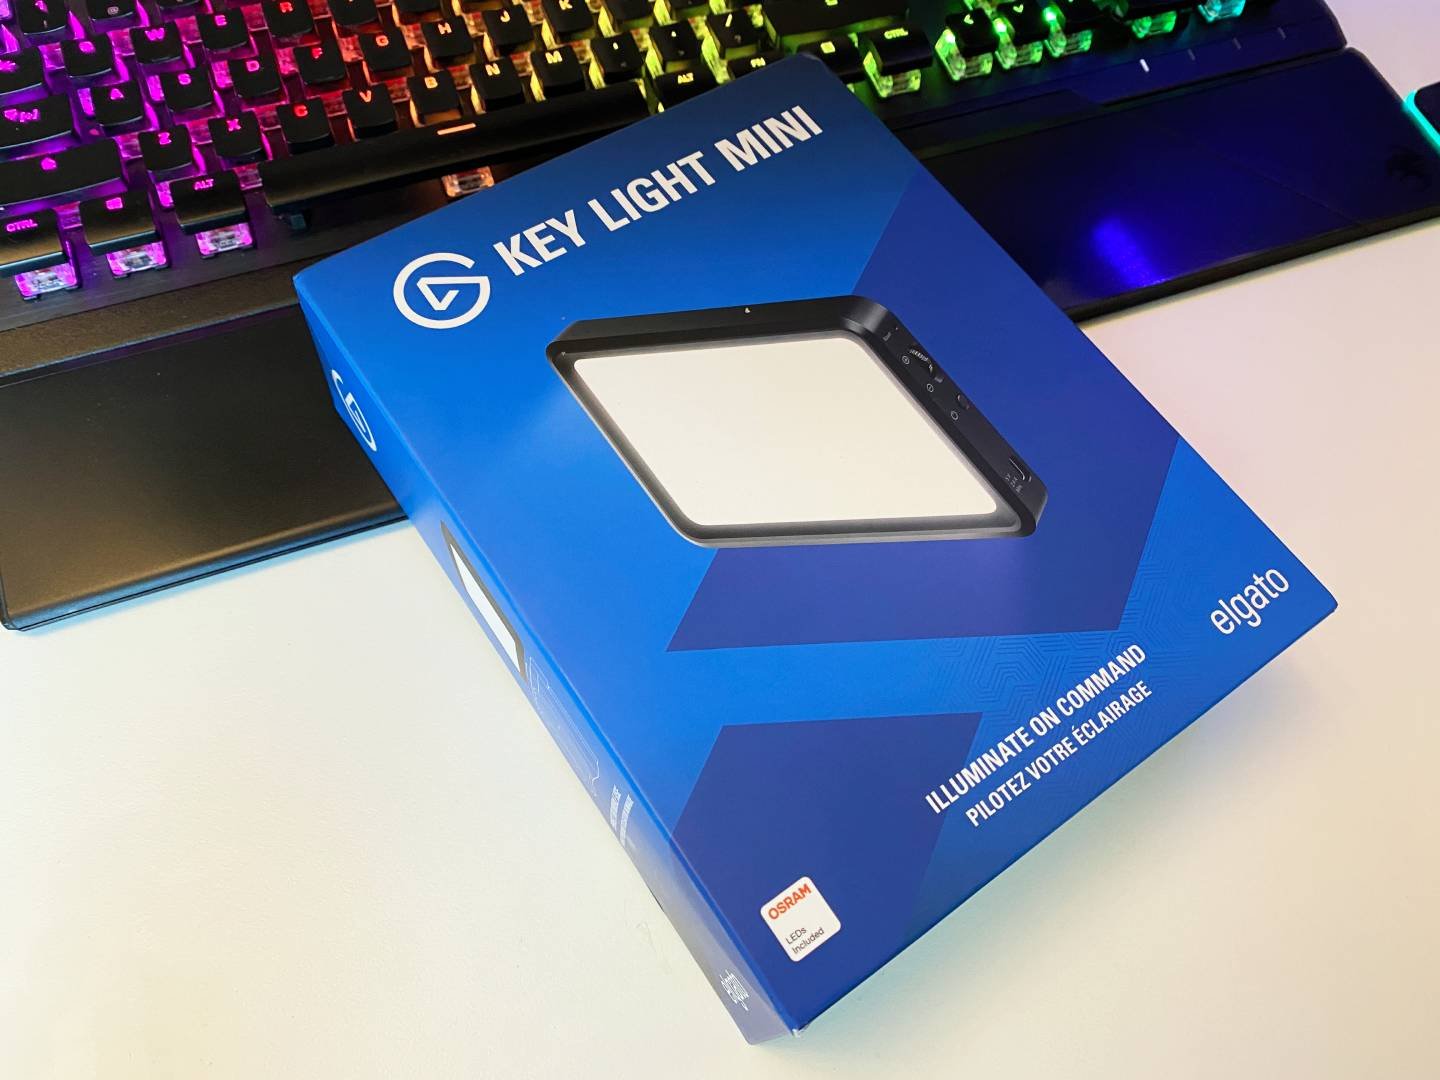 Elgato Key Light Mini Review: A Powerful, Budget-Friendly Light